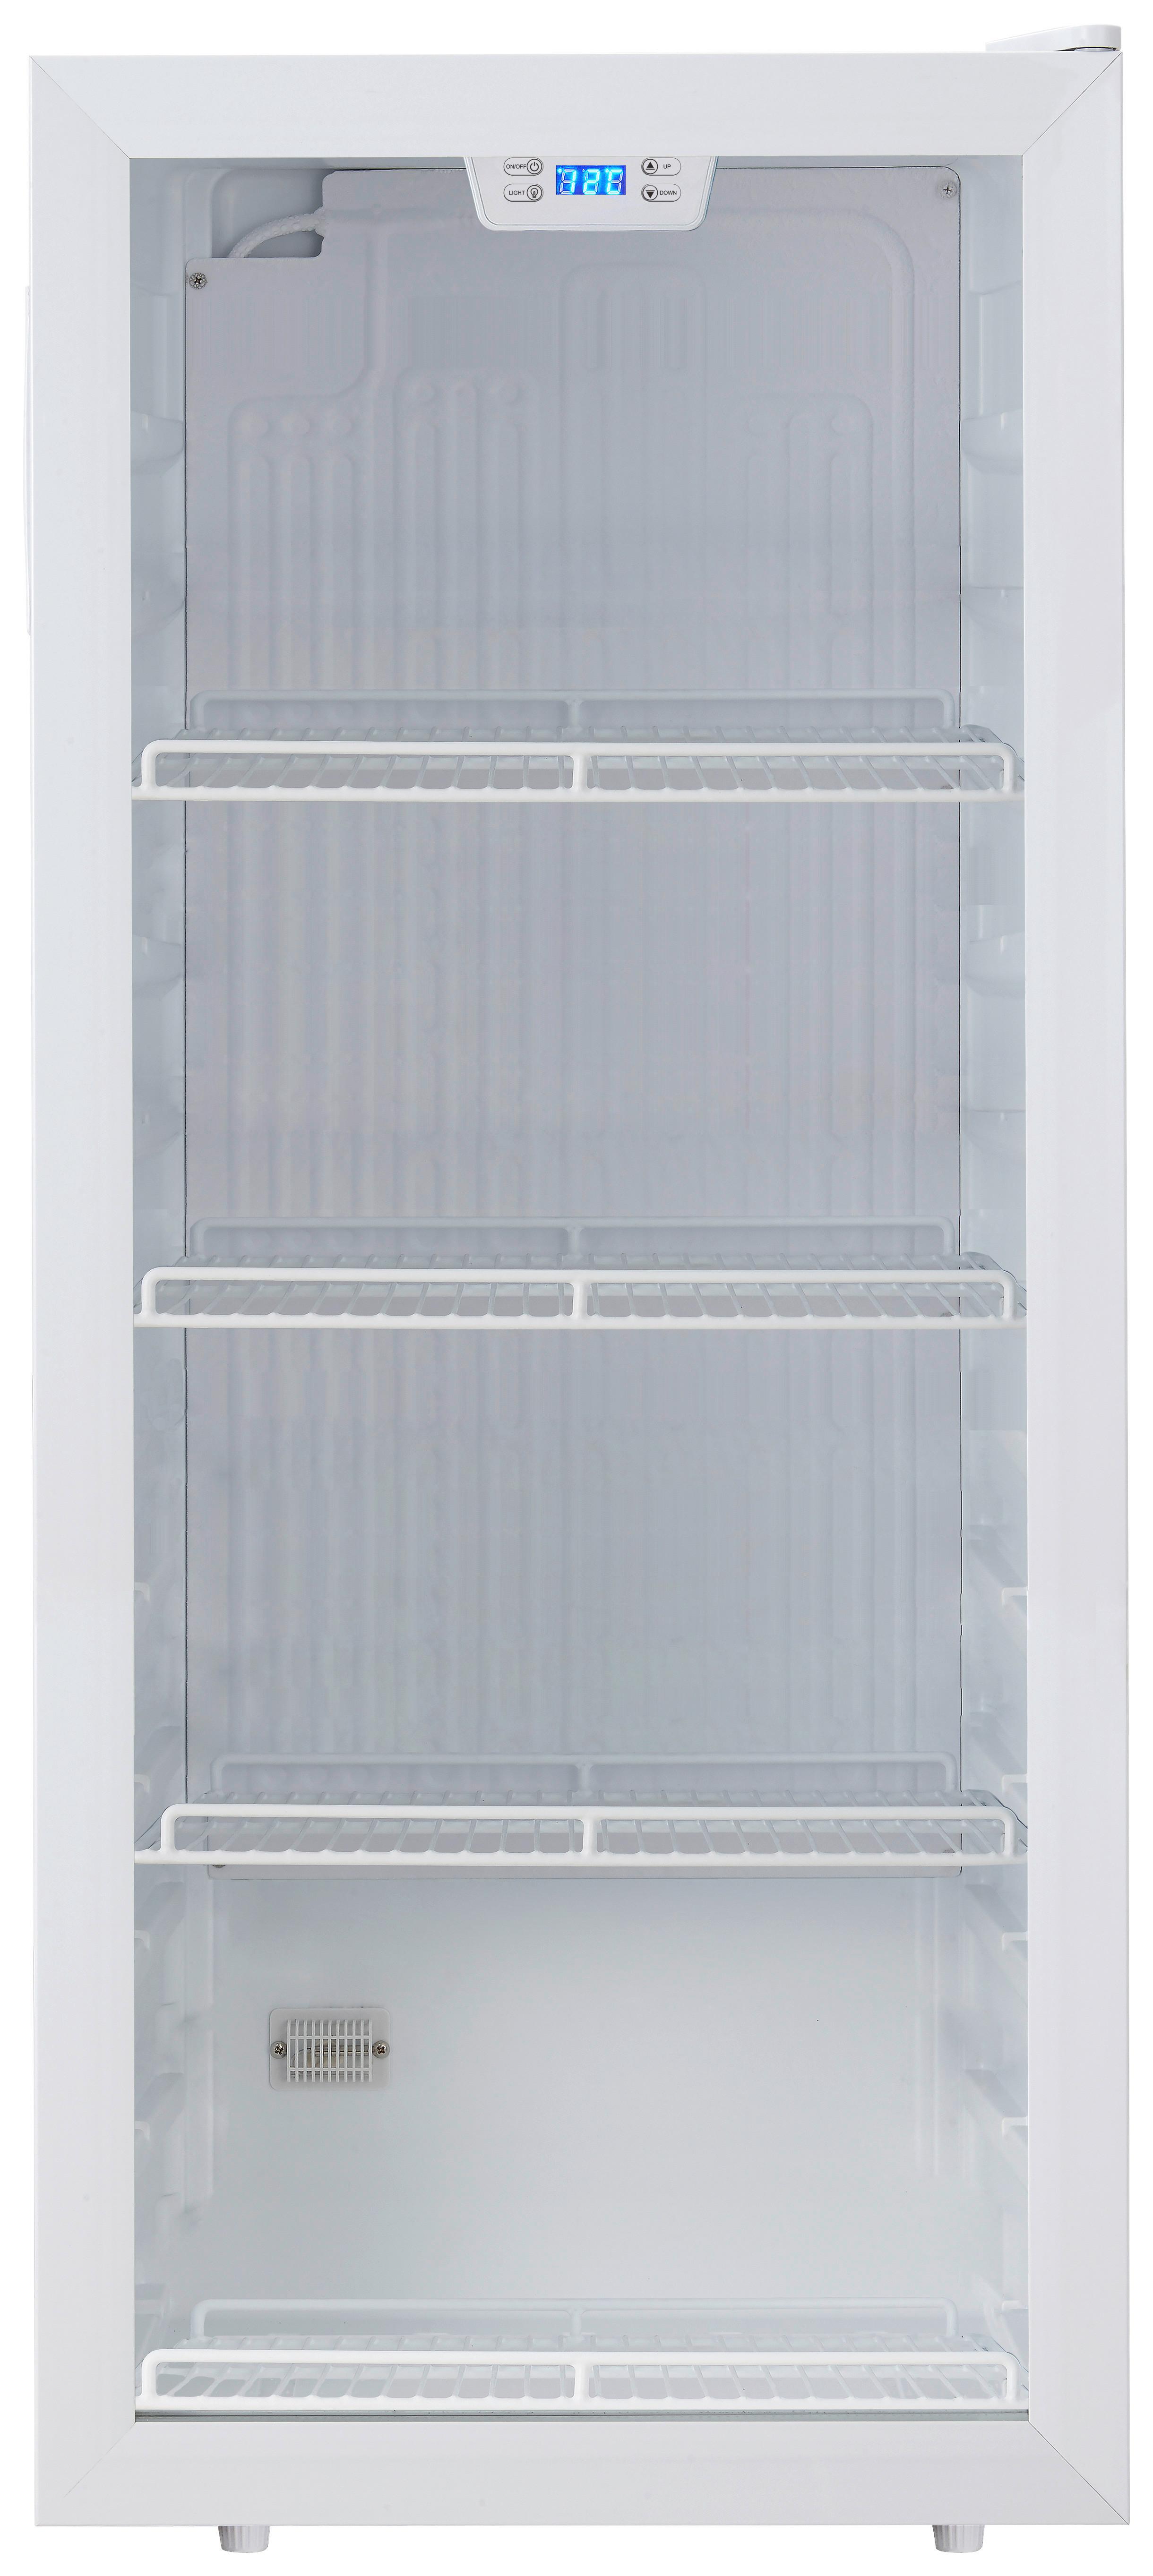 Getränkekühler G-Ks 2595 - Transparent/Weiß, Basics, Glas (55/127,7/56,5cm) - Silva Schneider